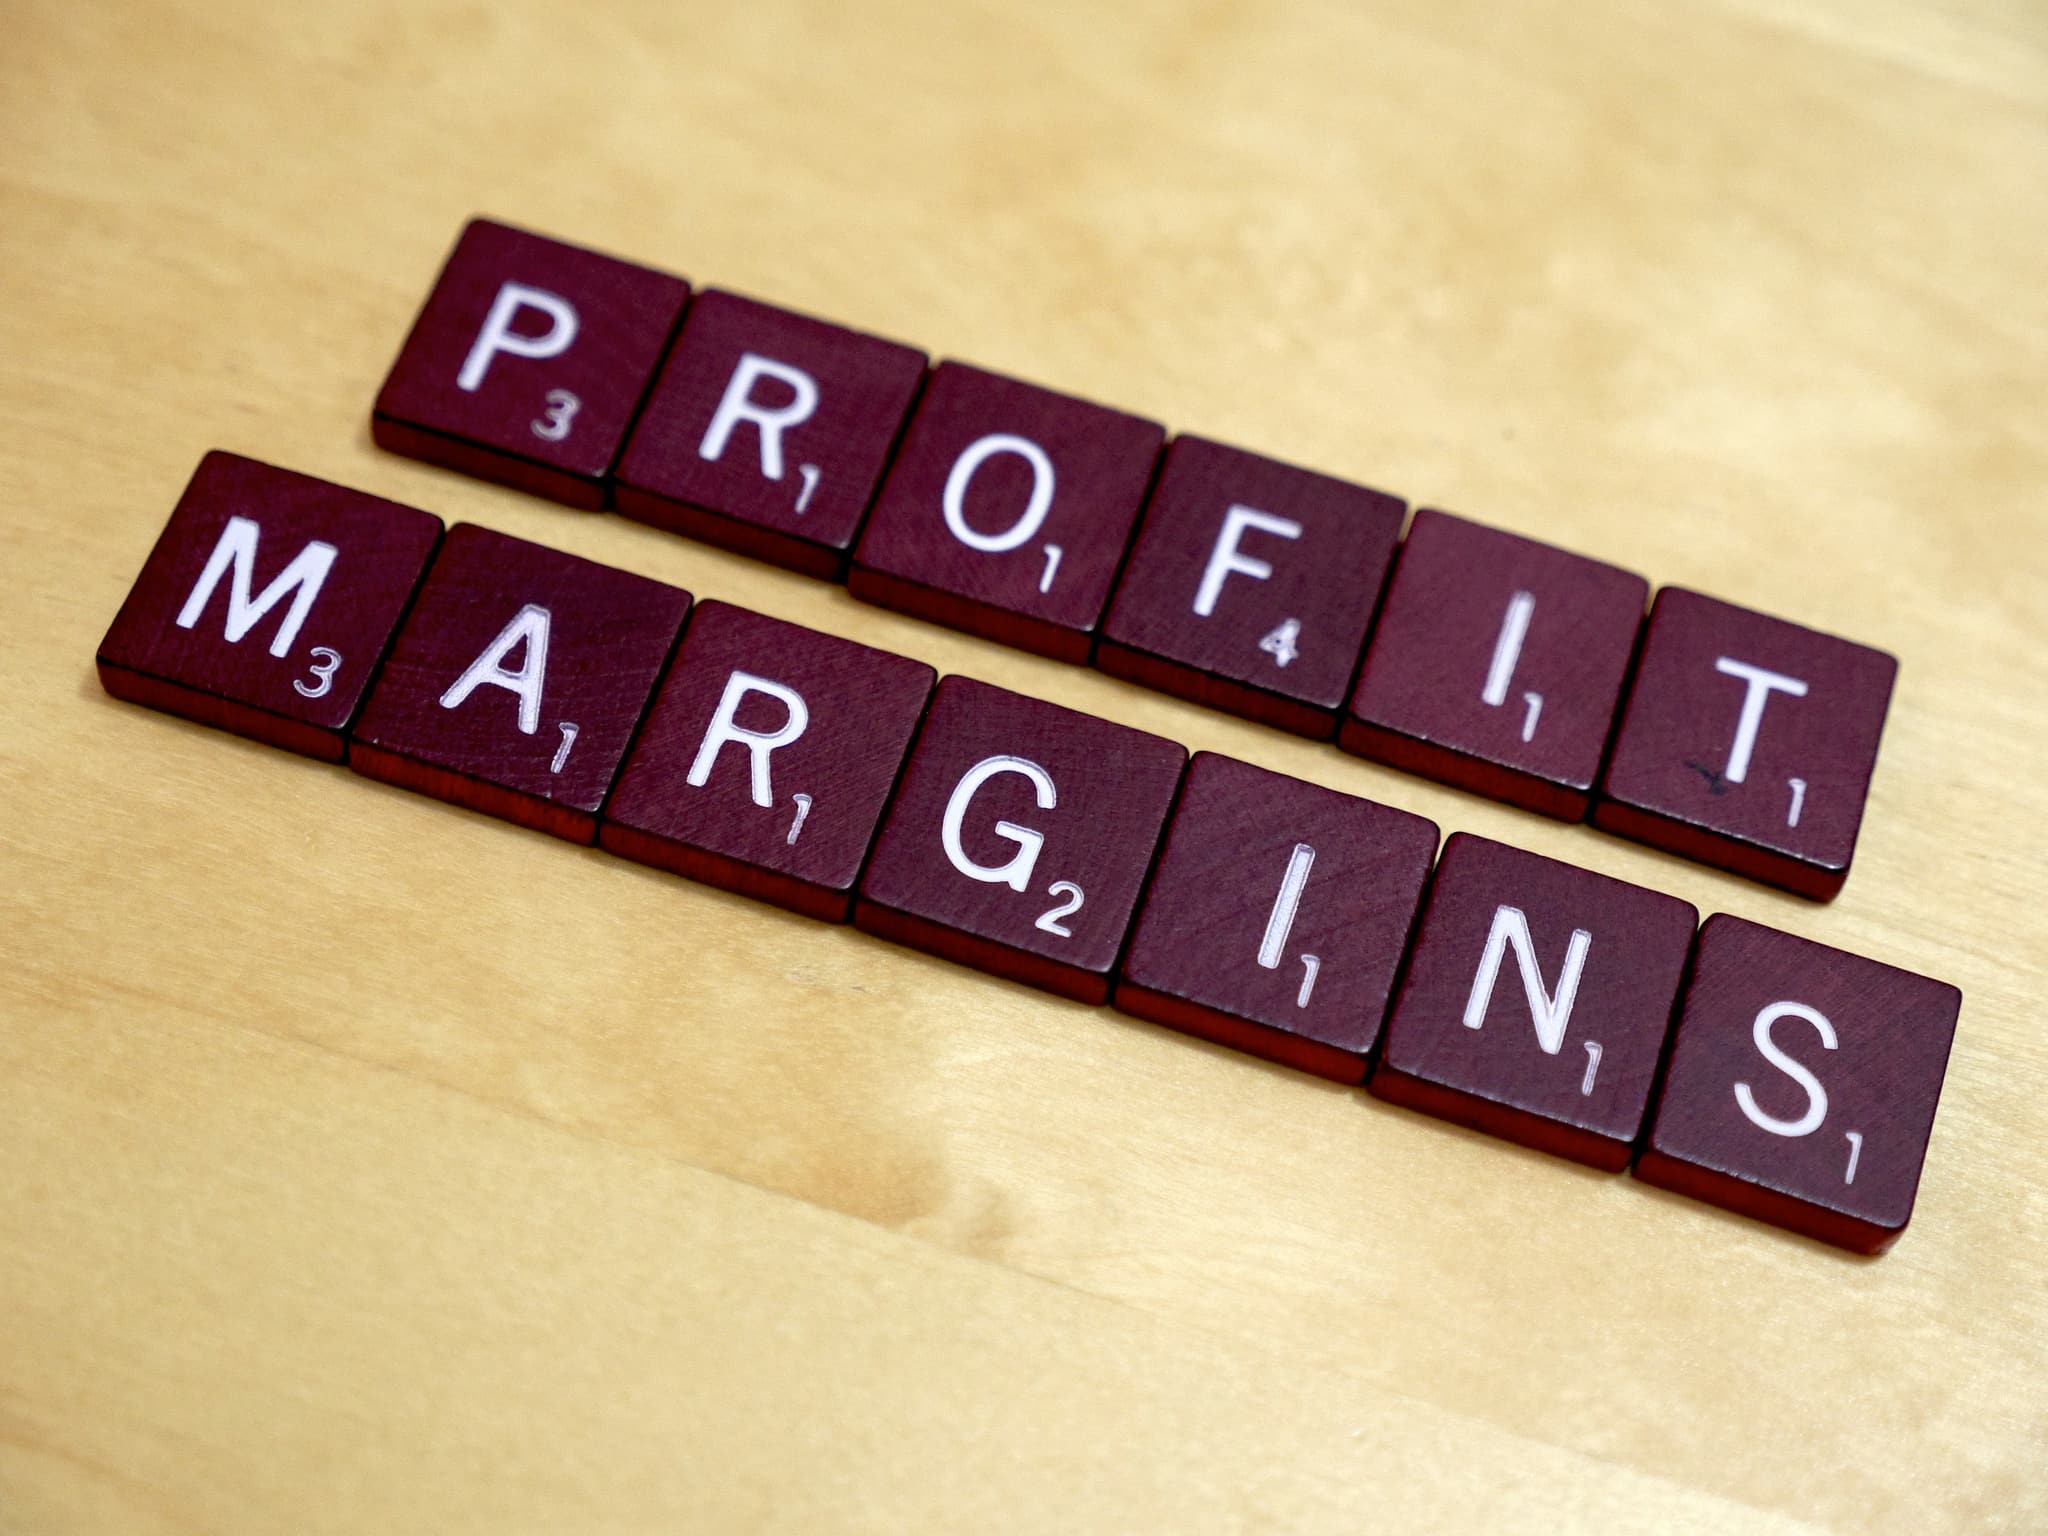 profit margin spelled out in scrabble letters